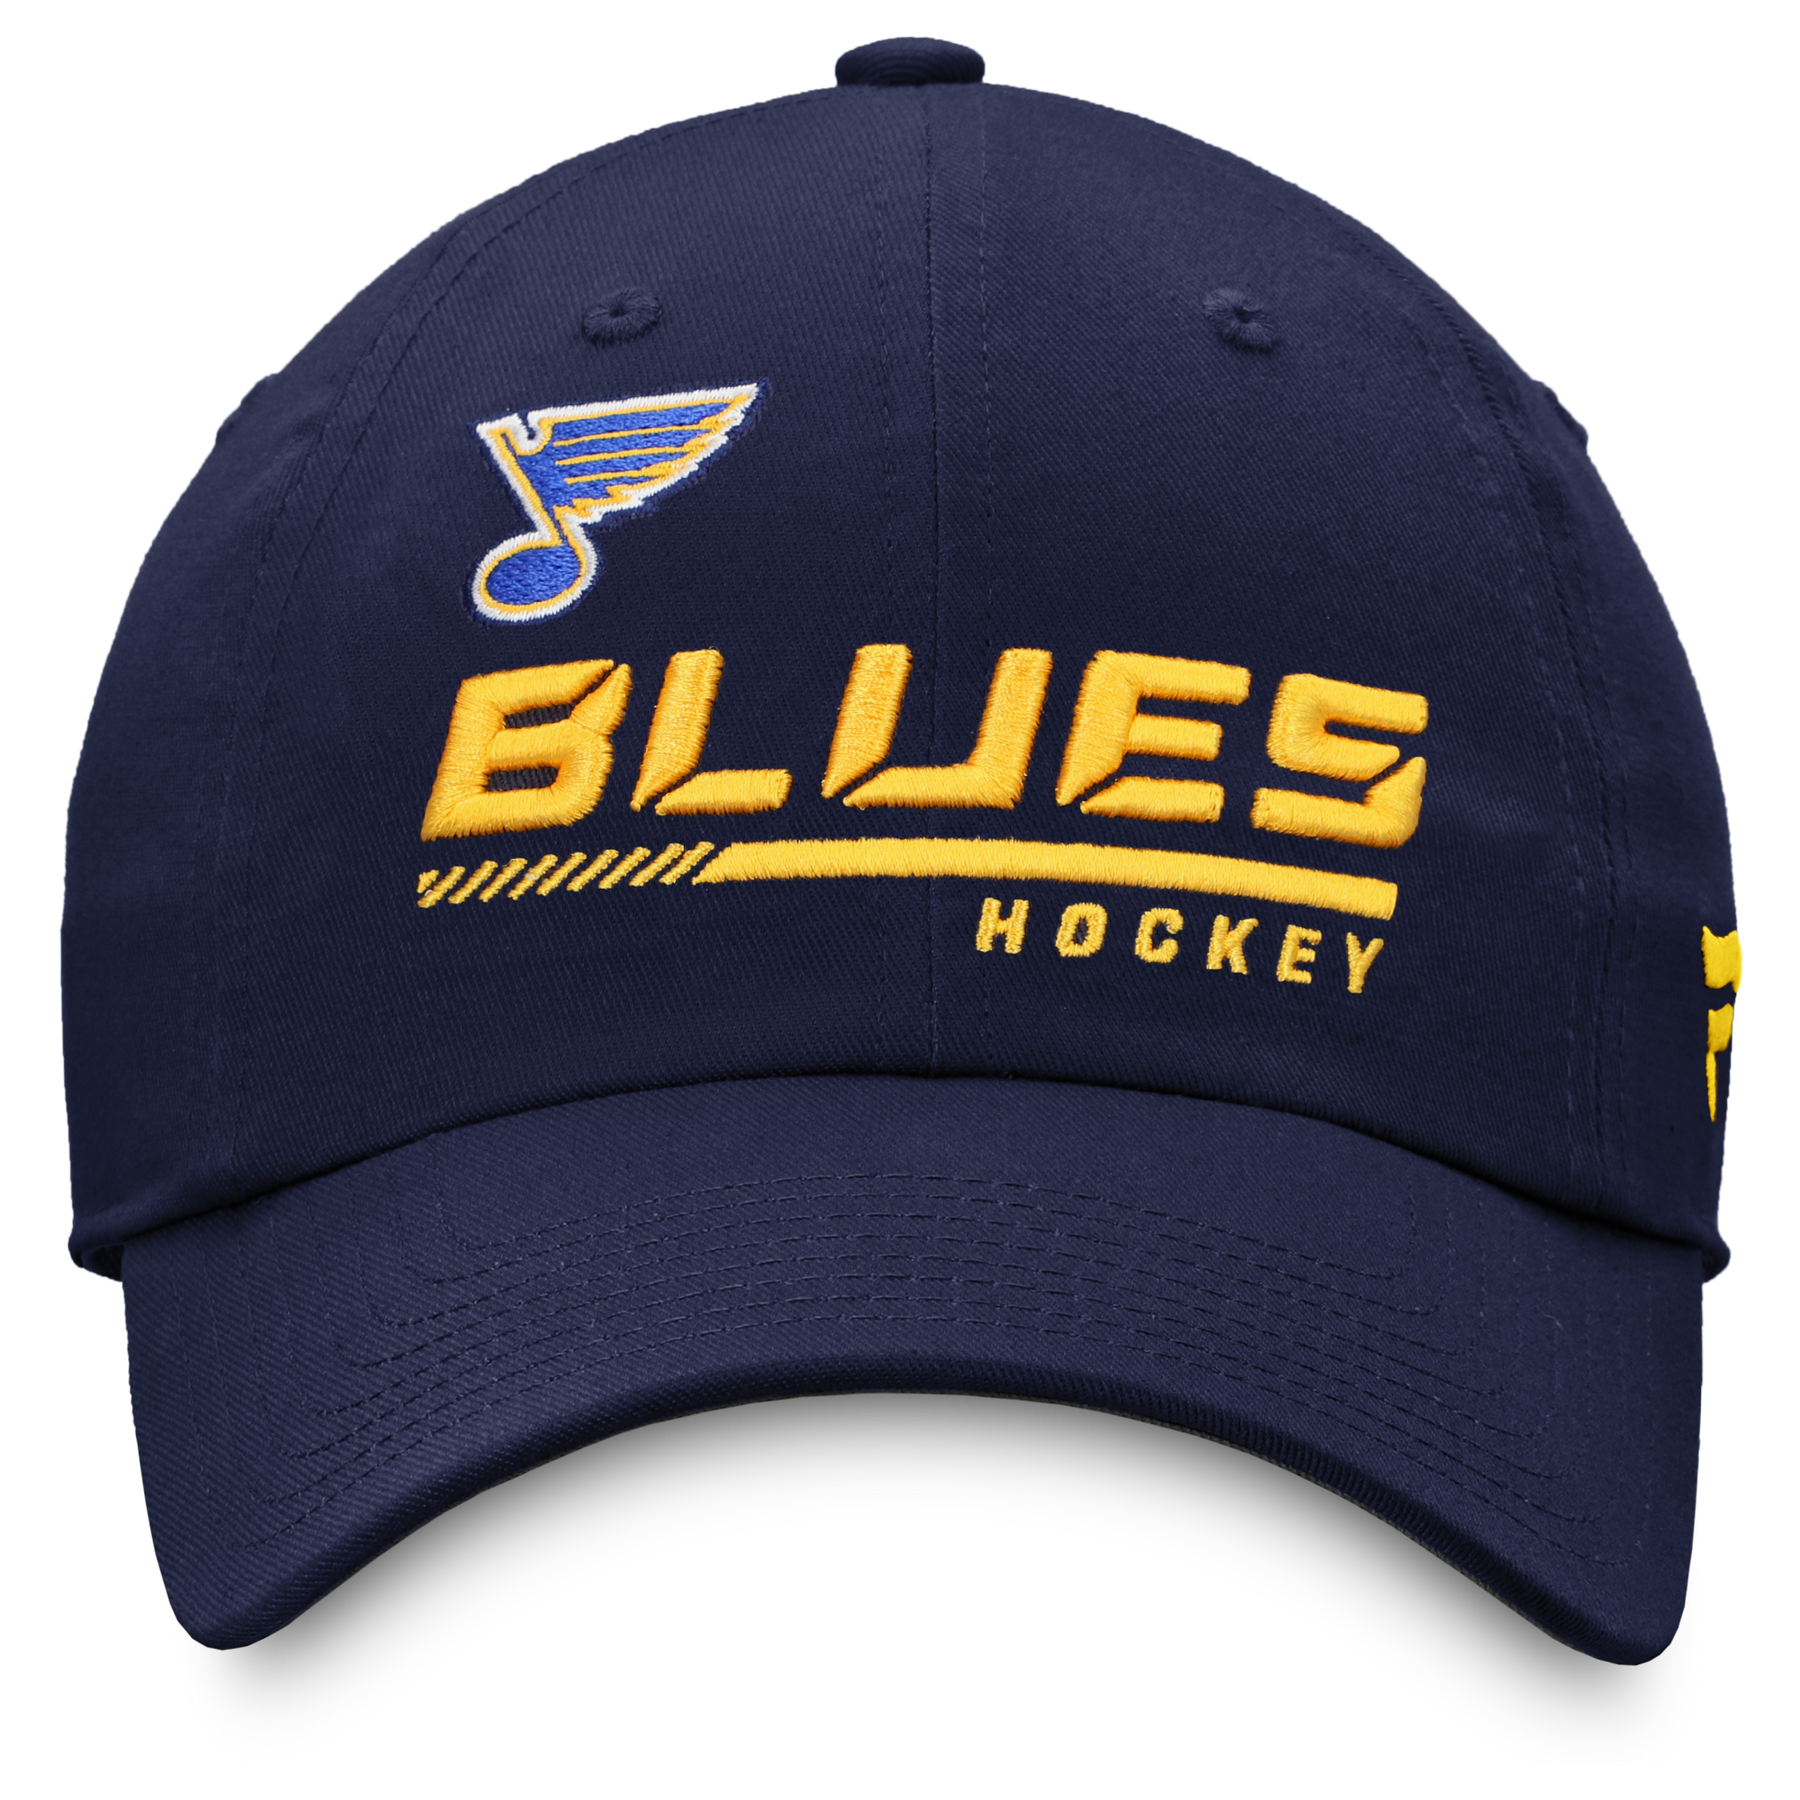 St. Louis Blues Authentic 2019 Blood Type Blue Velcro Hat by